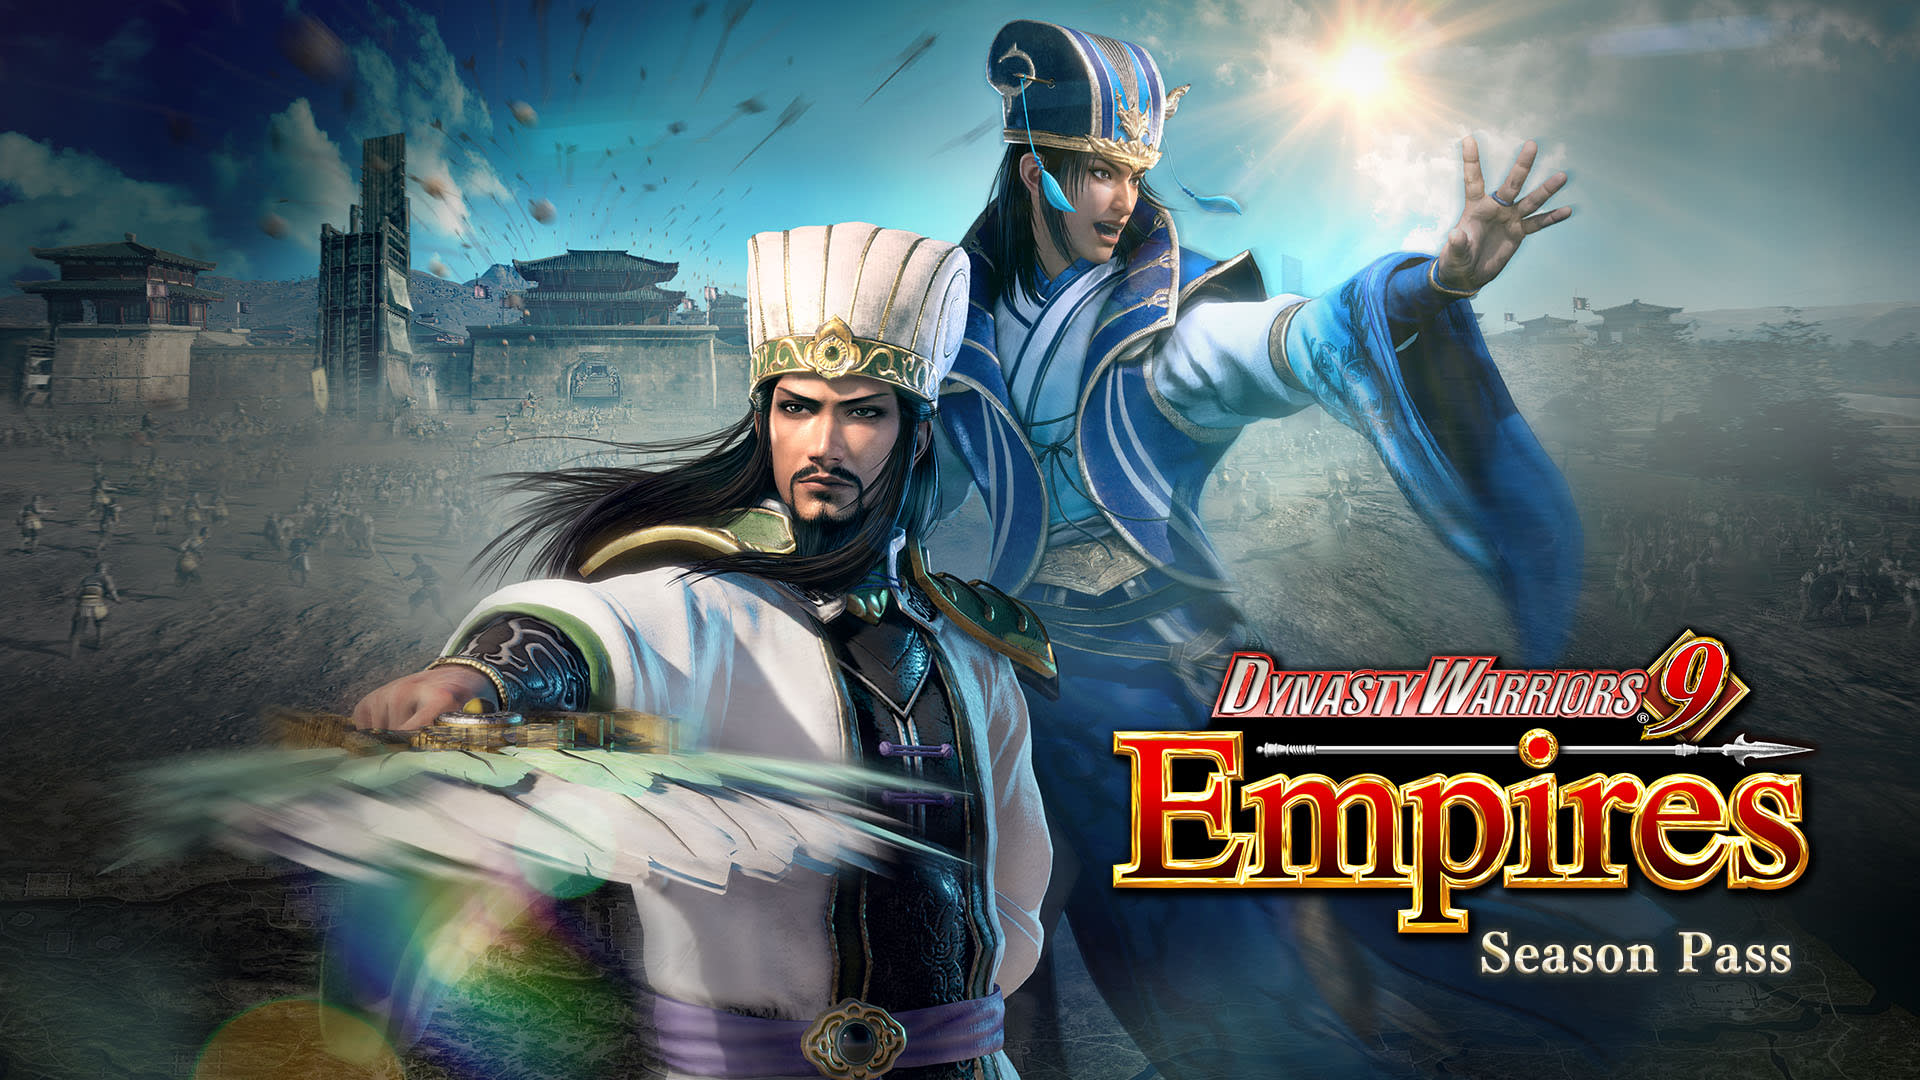 DYNASTY WARRIORS 9 Empires Season Pass